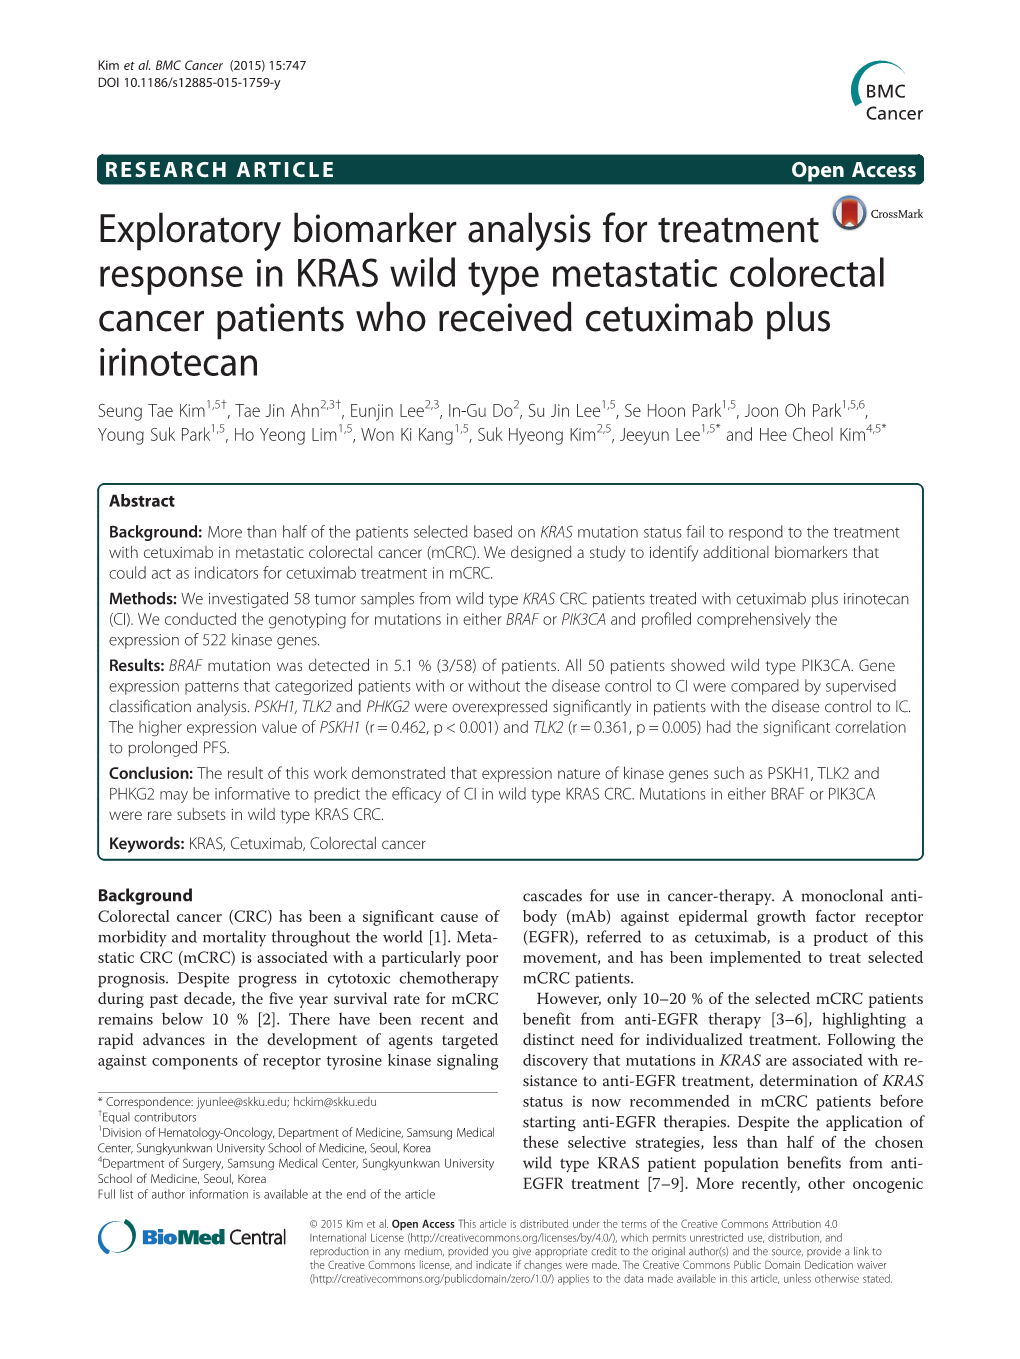 Exploratory Biomarker Analysis for Treatment Response in KRAS Wild